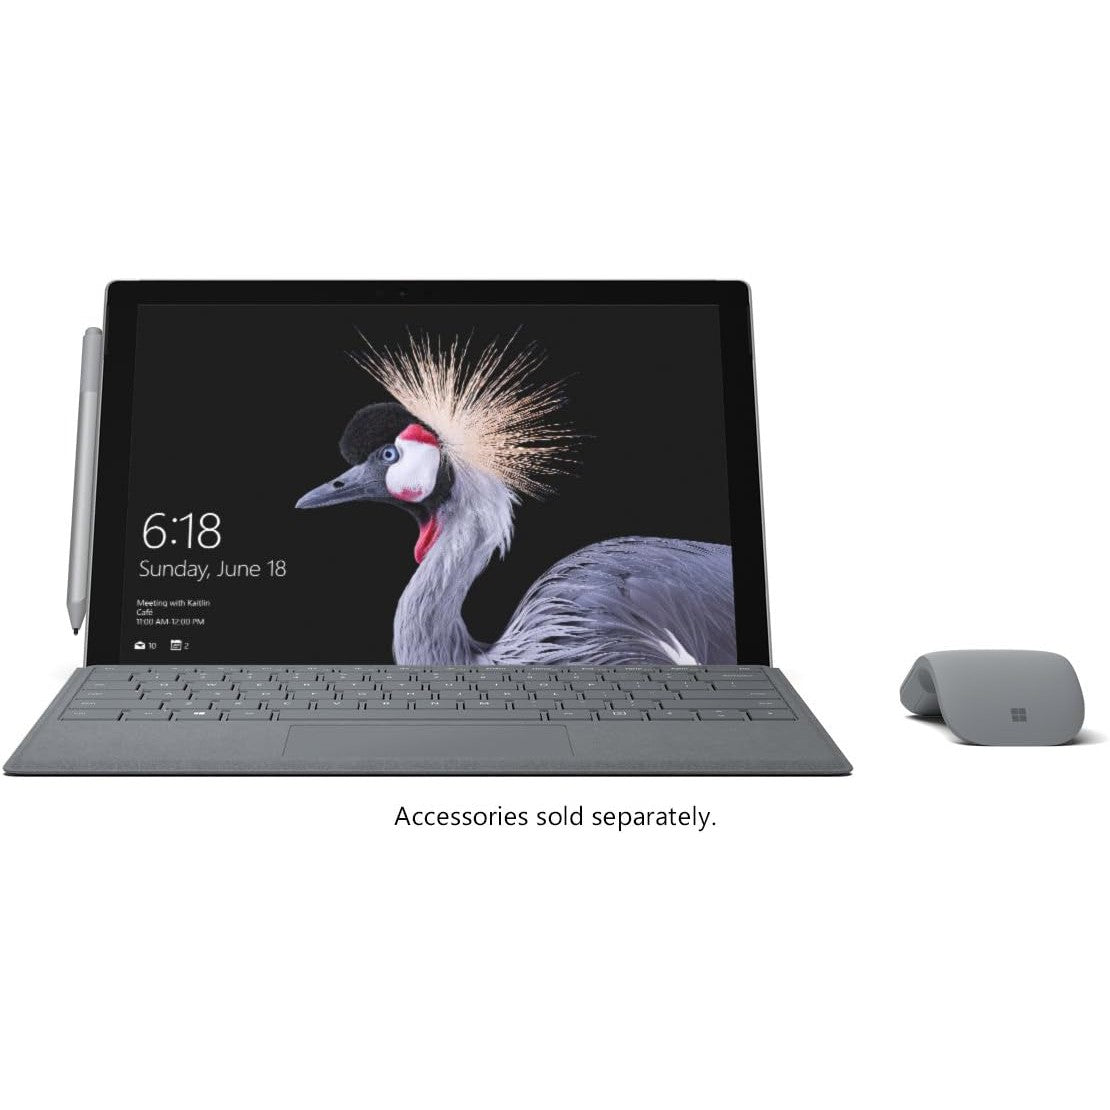 Microsoft Surface Pro 5 Intel Core i5-7300u 256GB 8GB RAM - Silver - Refurbished Excellent